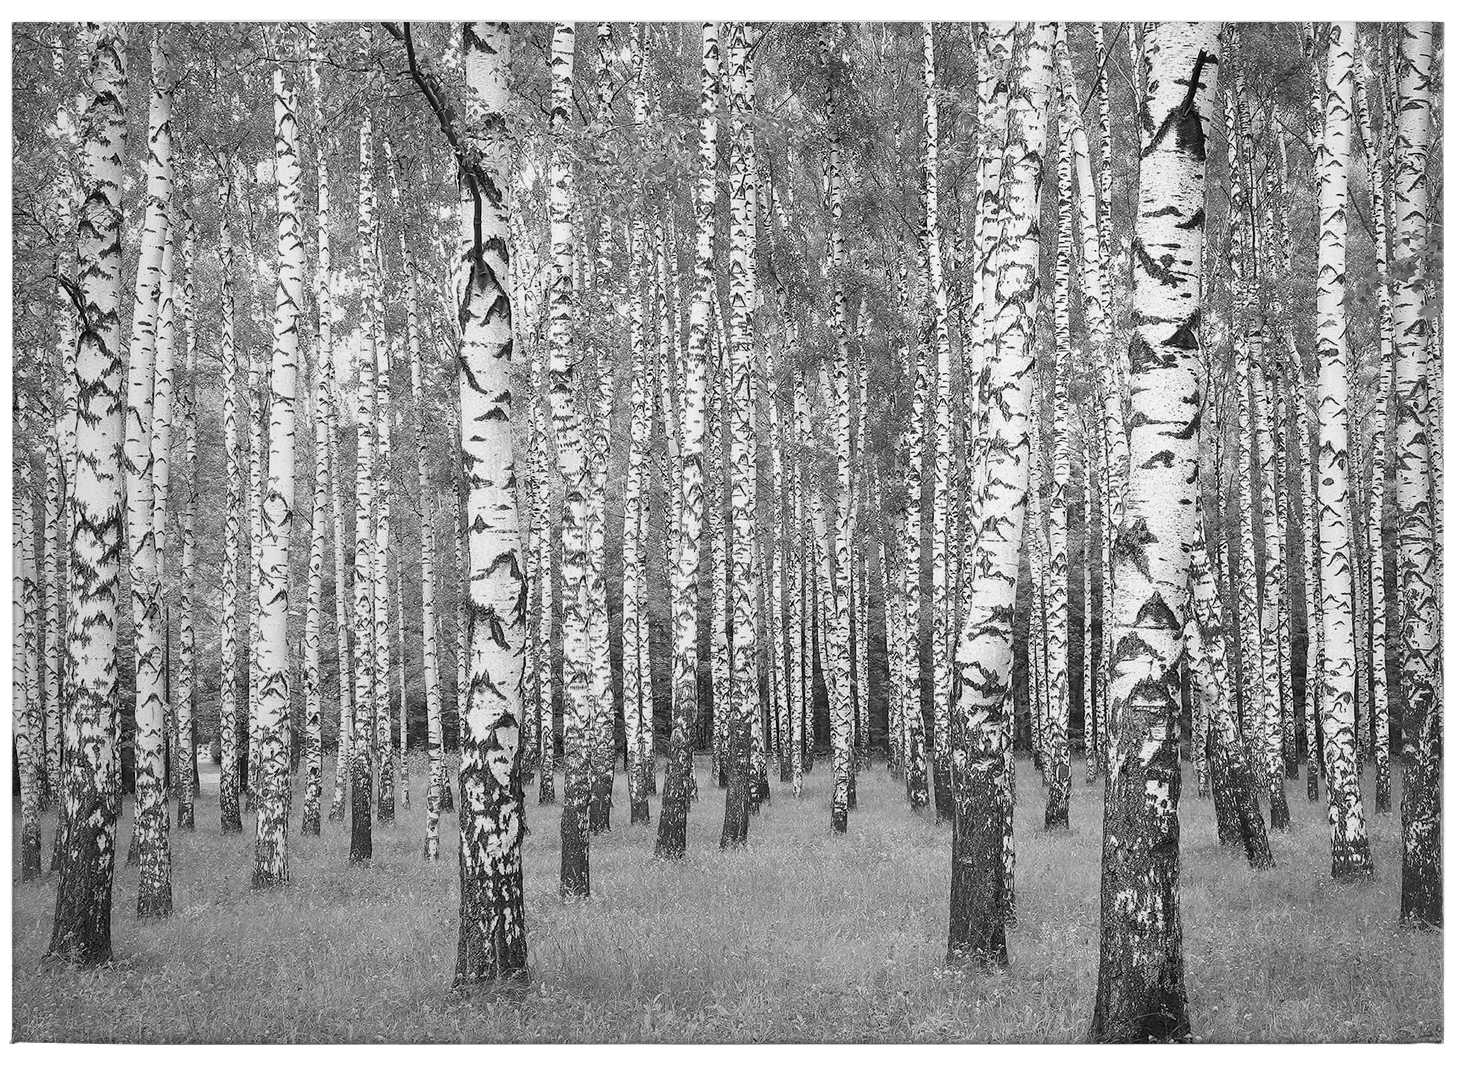             Berkenbos zwart-wit canvas schilderij - 0.70 m x 0.50 m
        